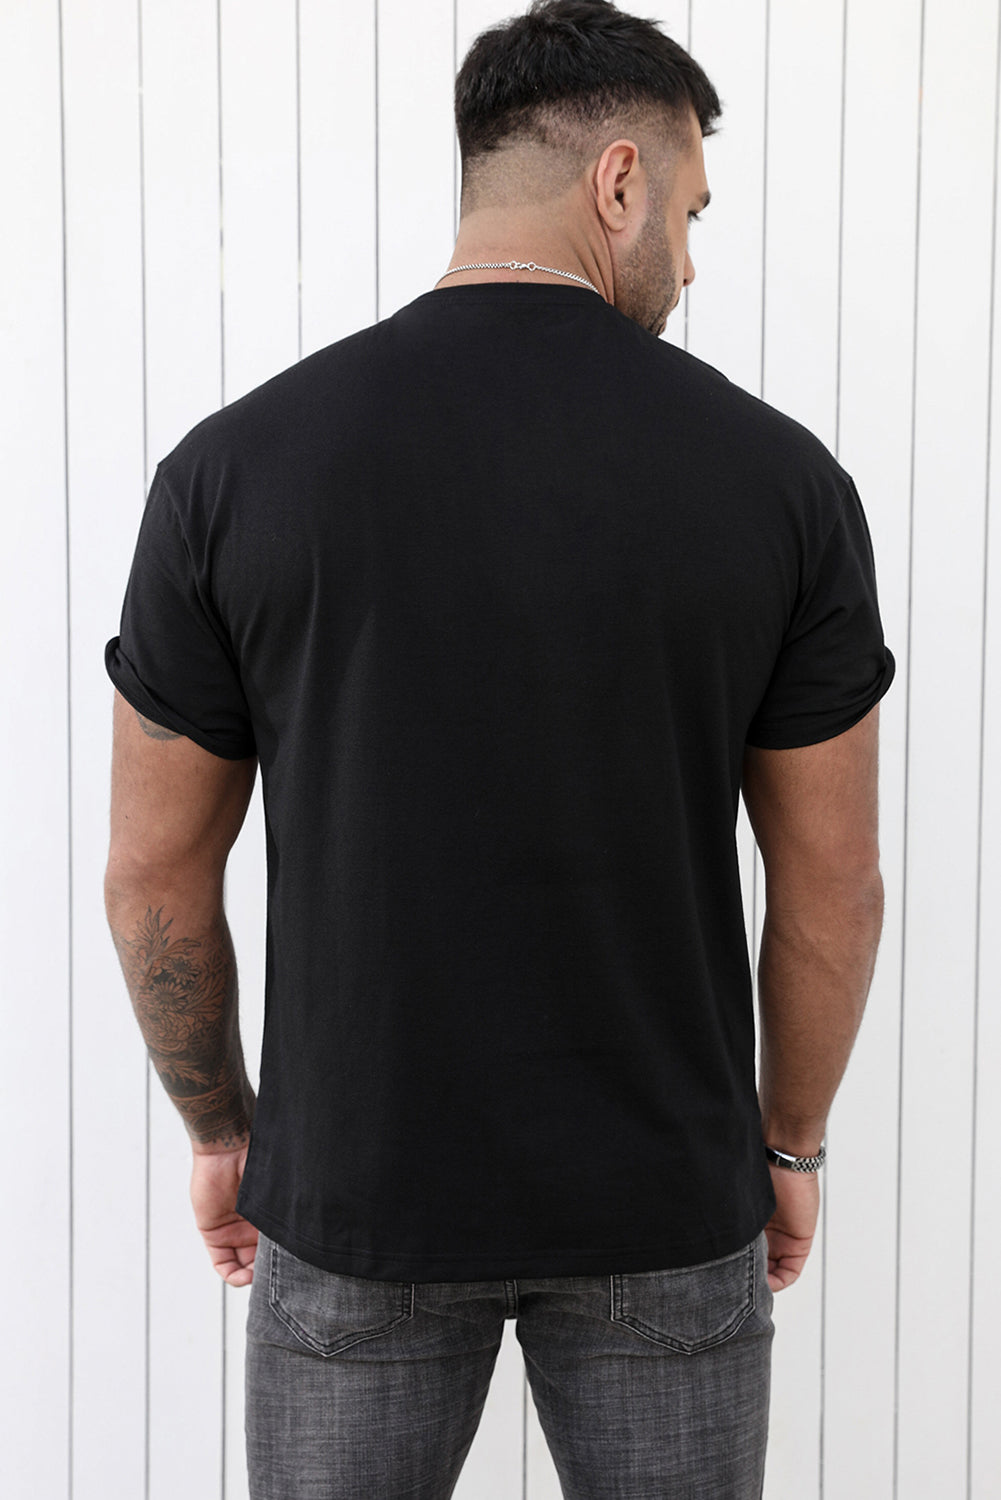 Black Pirate Skull Dot Plot Mens Short Sleeve T Shirt Men's Tops JT's Designer Fashion